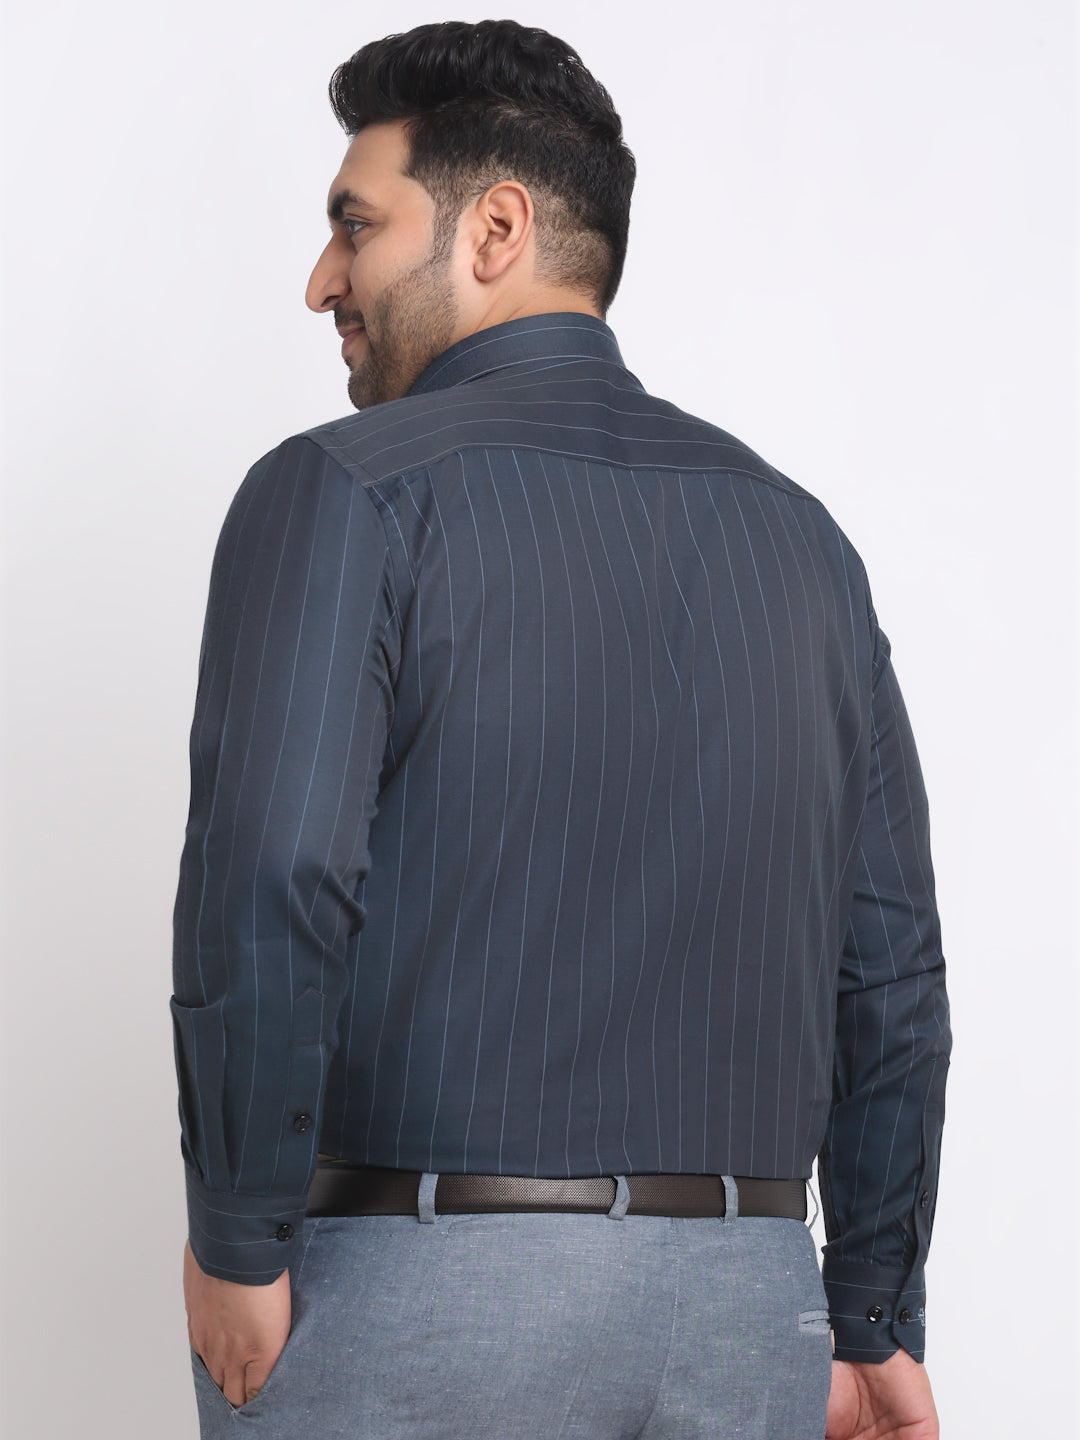 Black Vertical Striped Cotton Formal Shirt